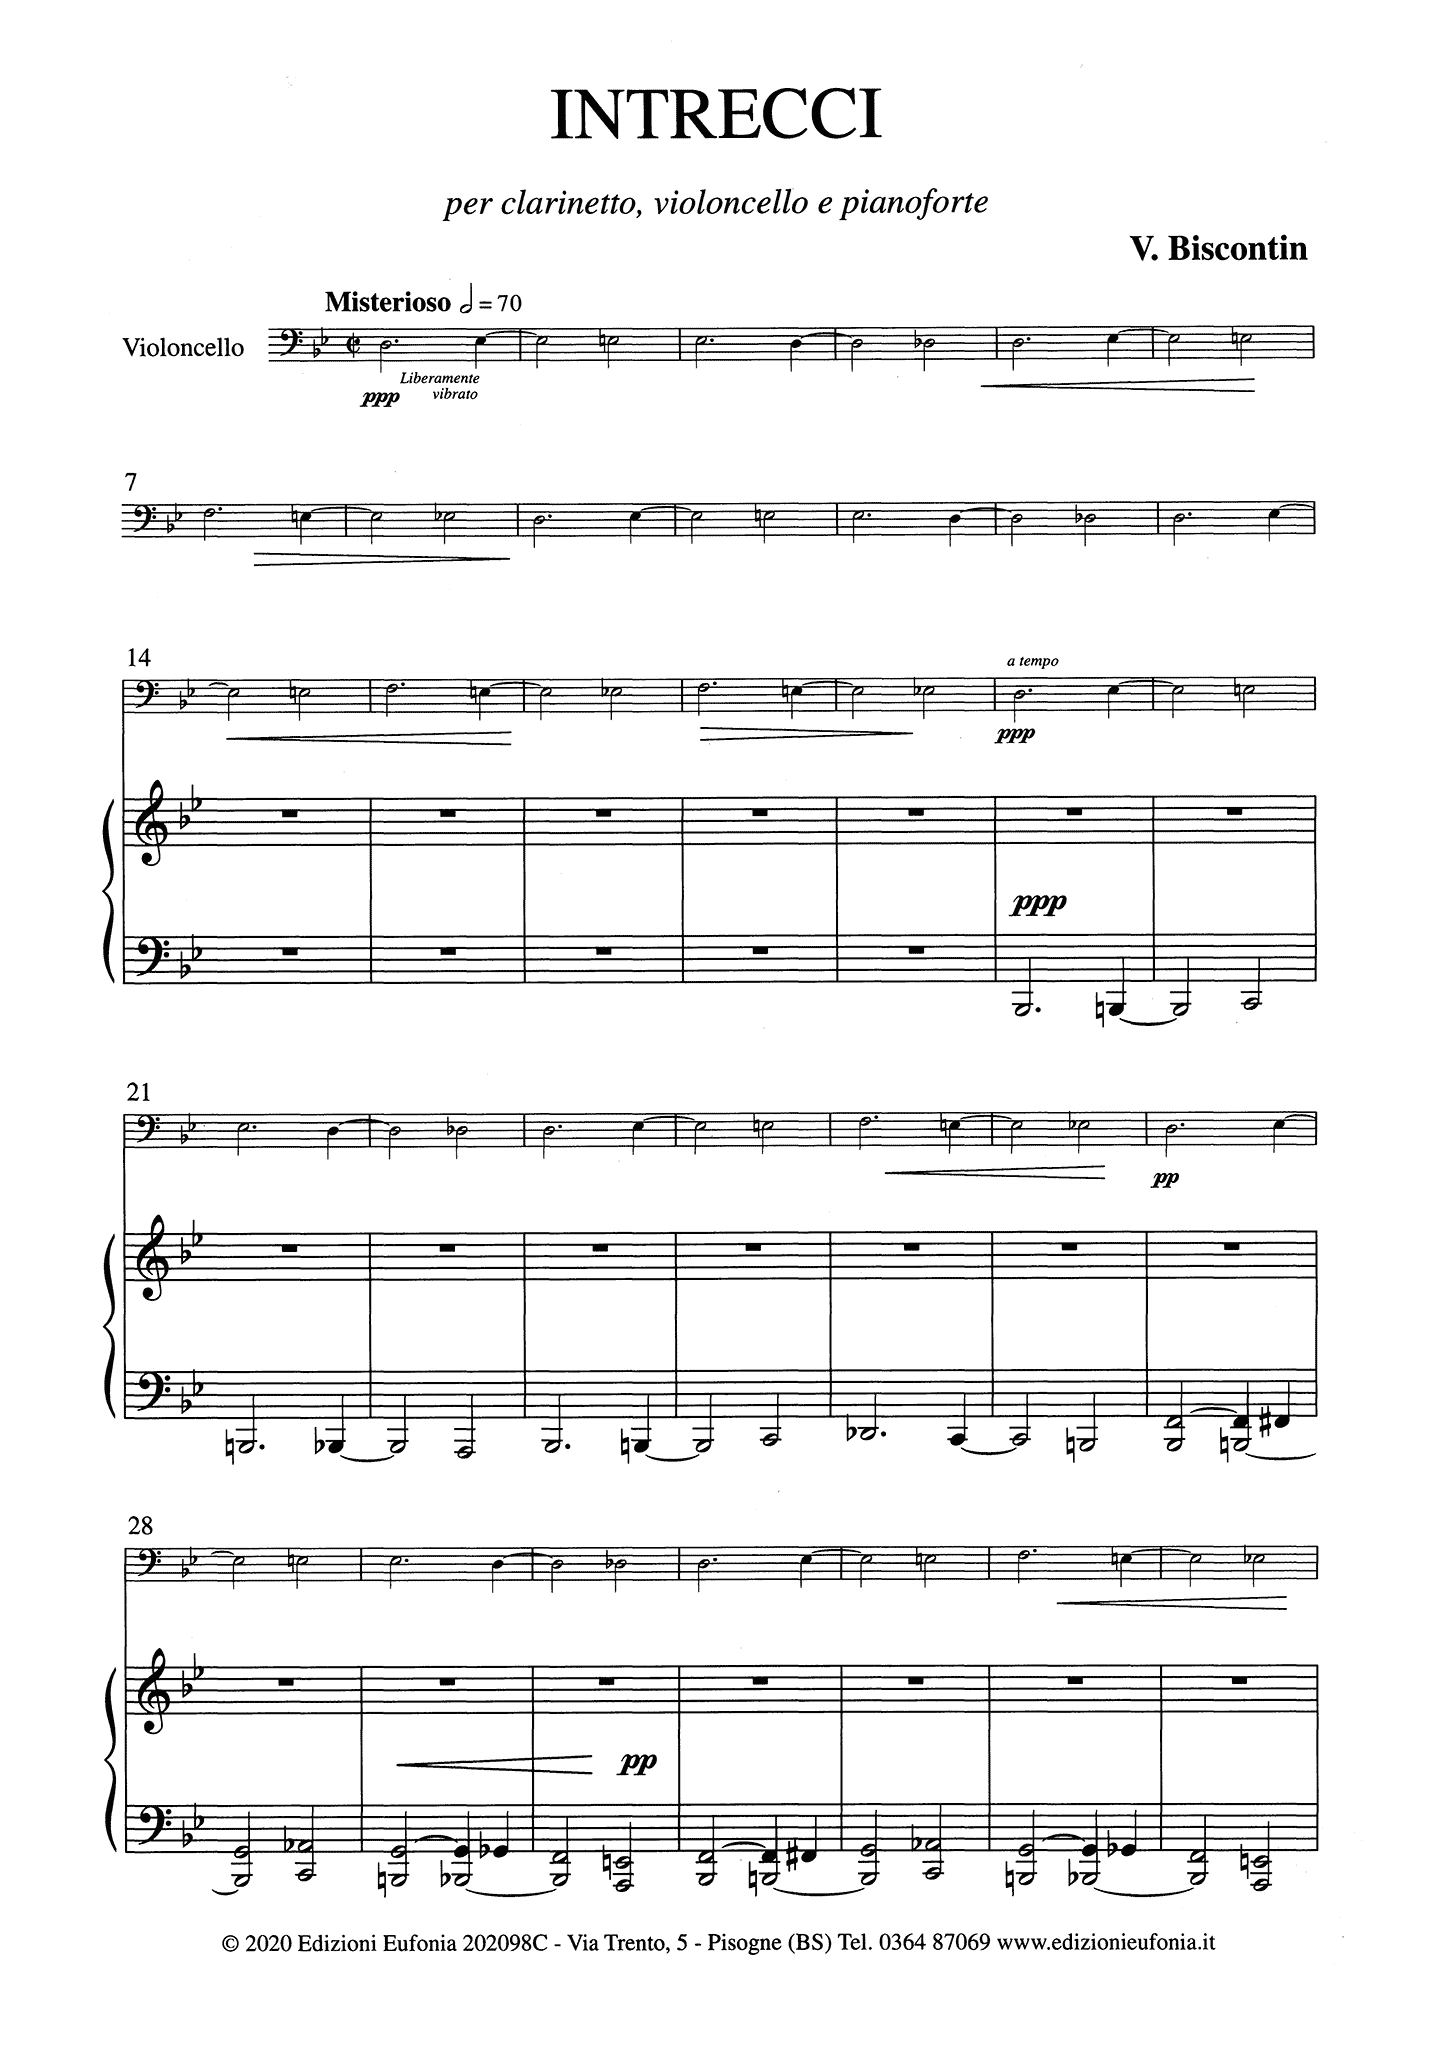 Venceslao Biscontin Intrecci clarinet violin piano trio - Movement 1